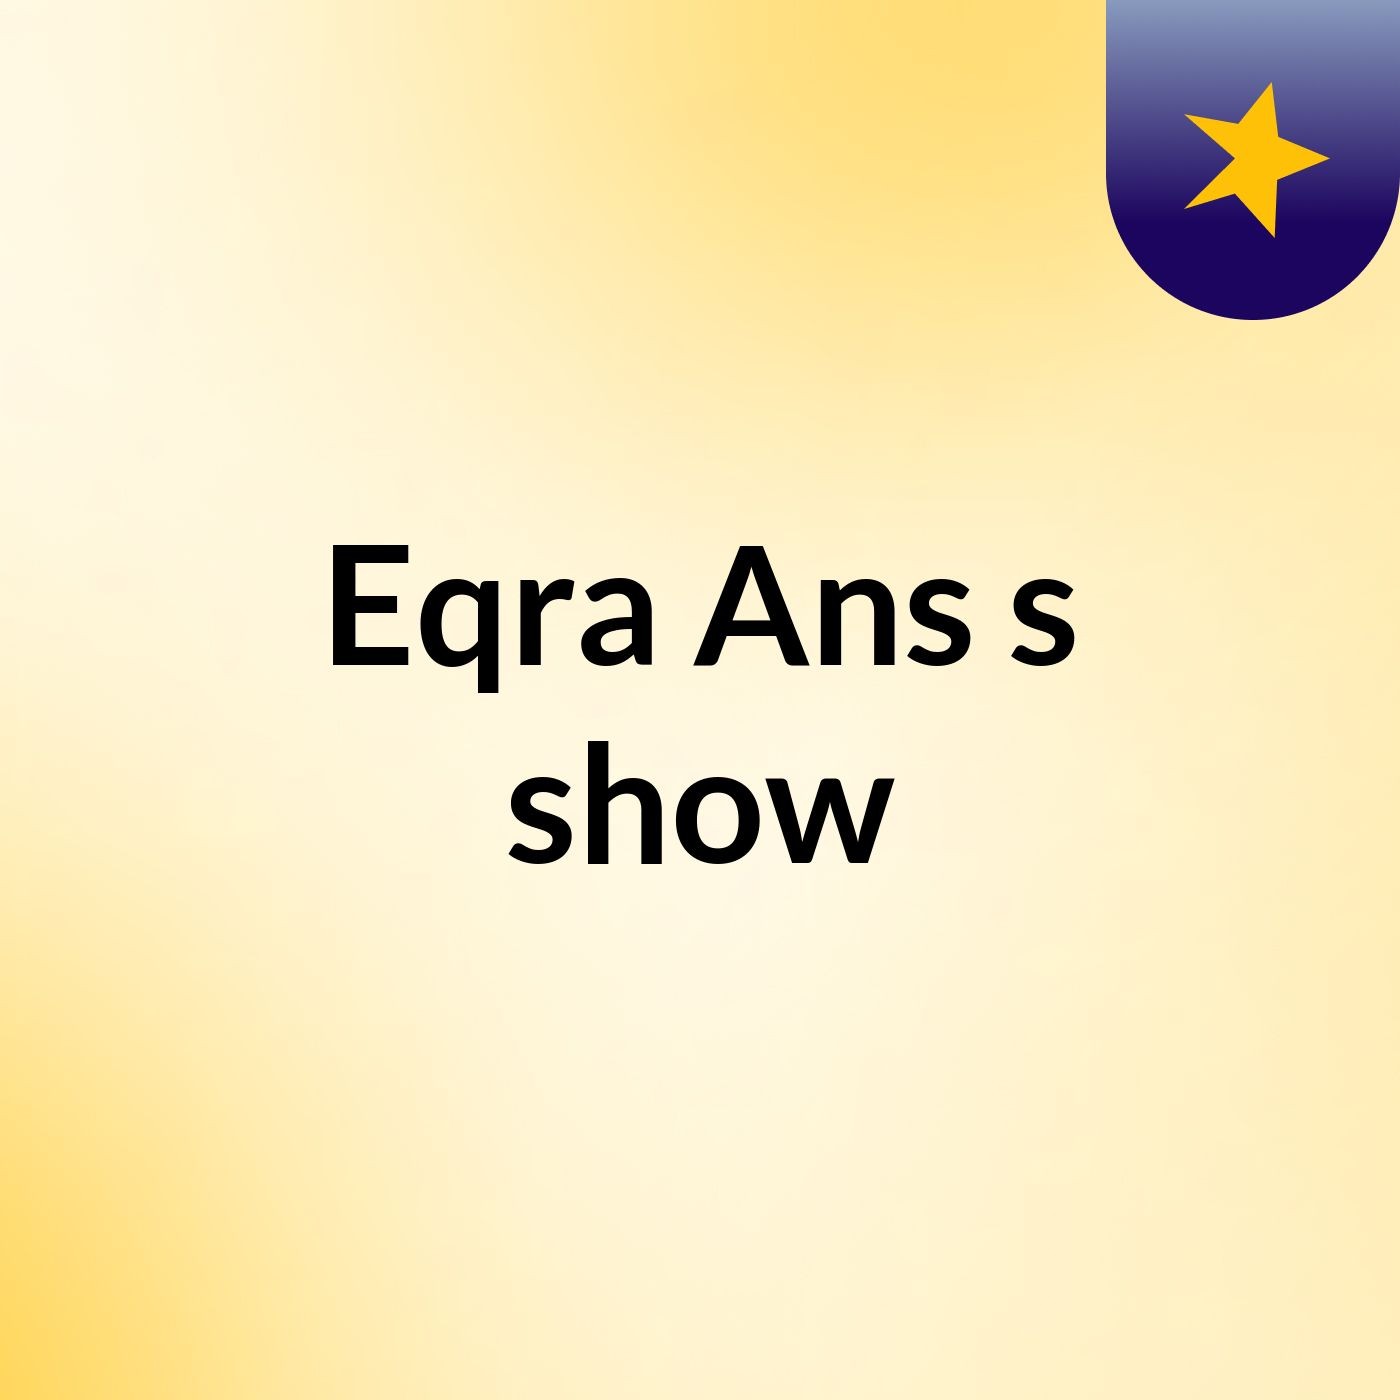 Eqra Ans's show